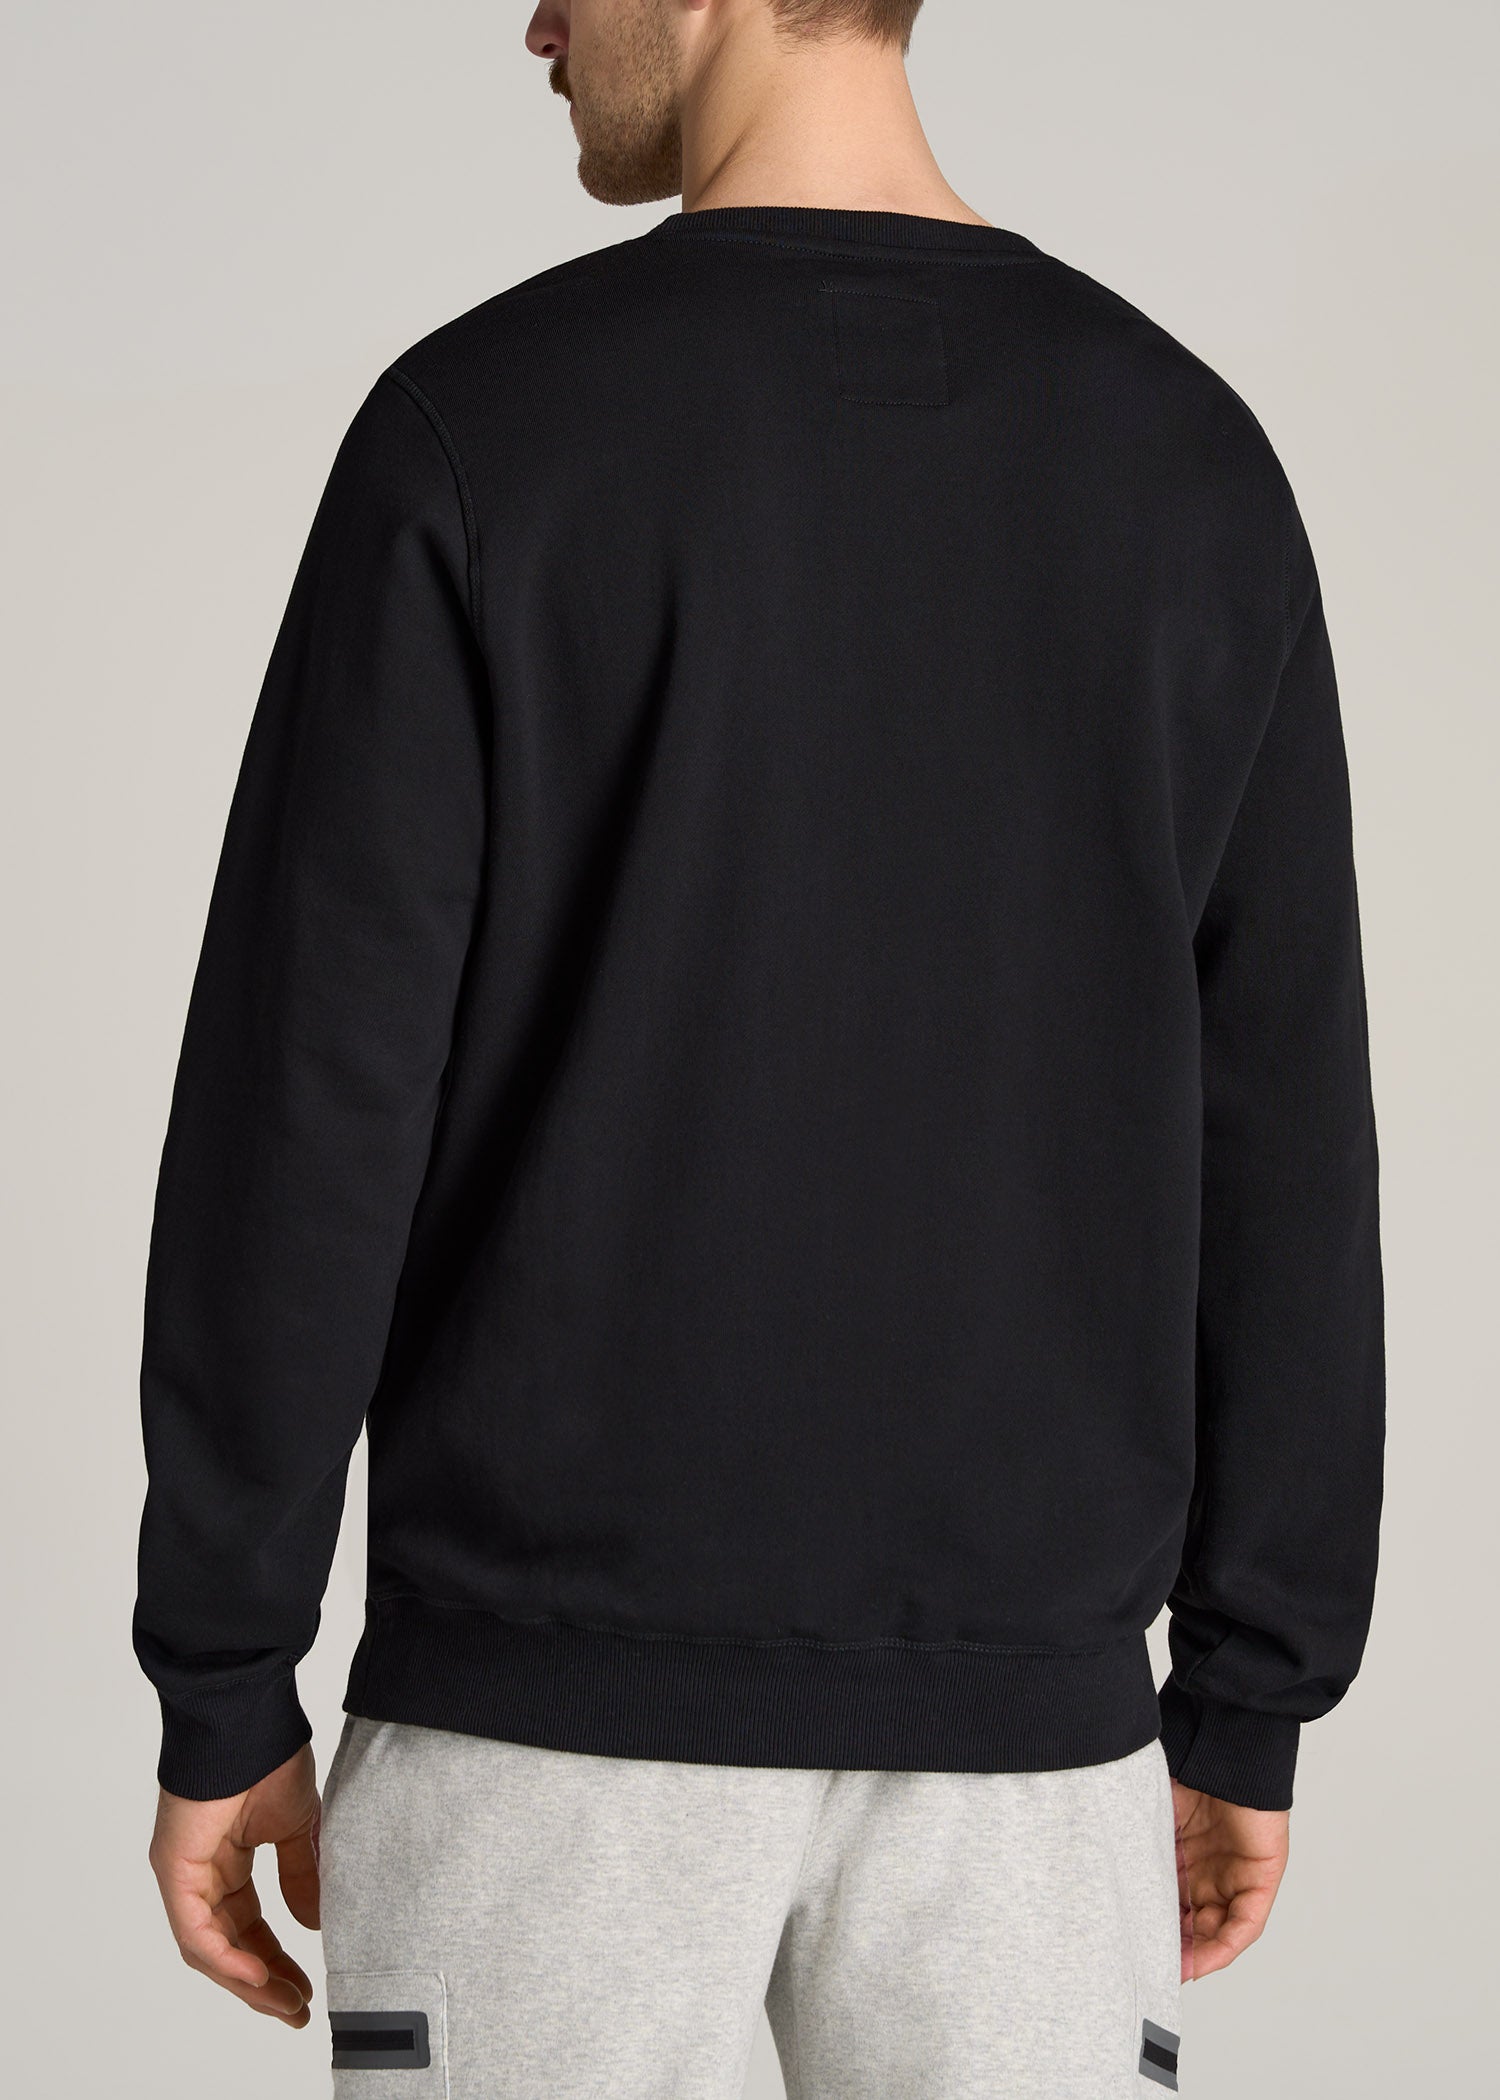 Men's Black on Black Sweatshirt